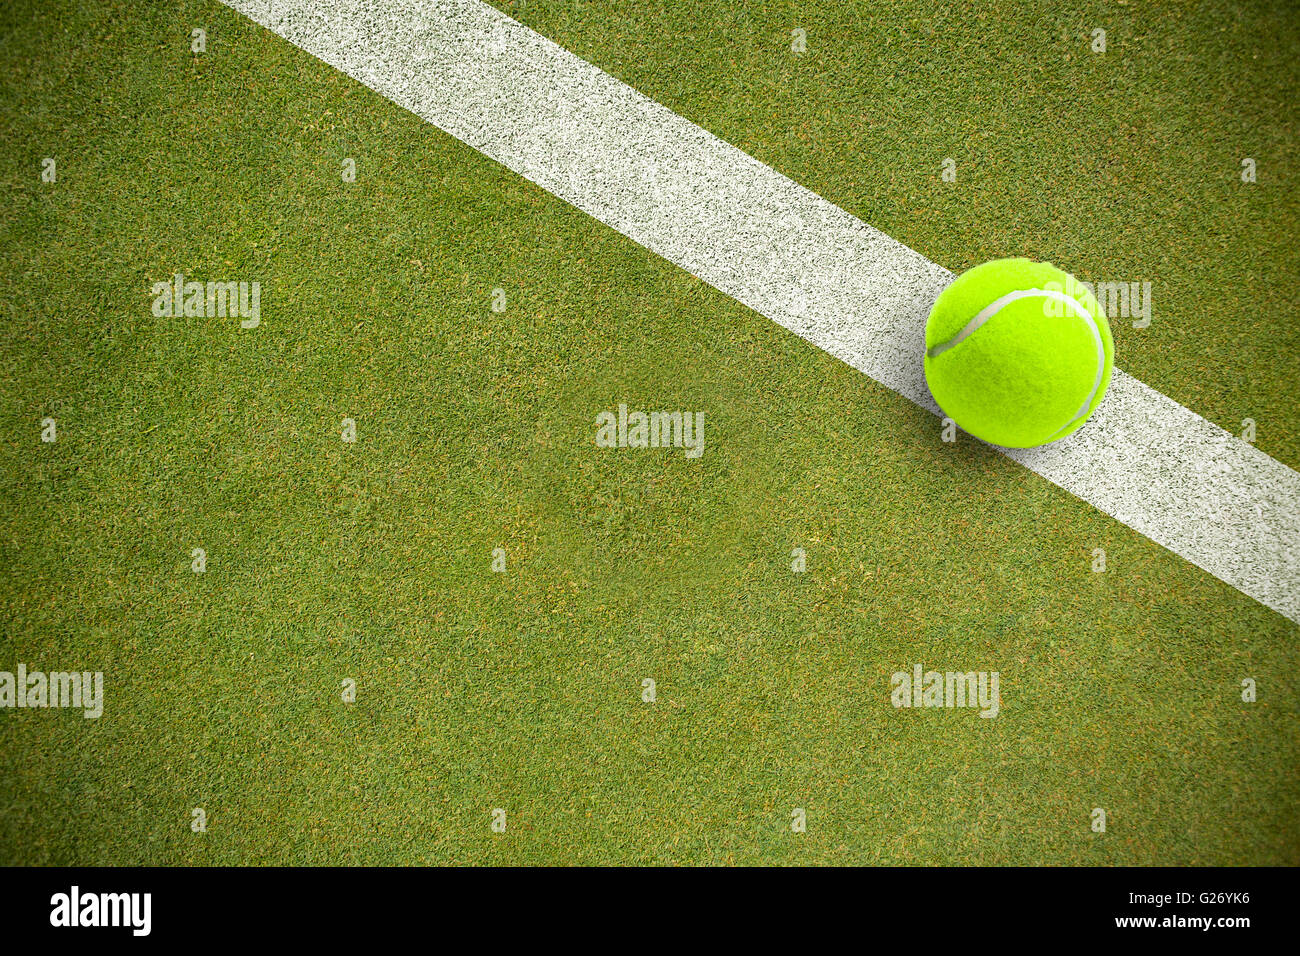 Imagen compuesta de pelota de tenis con una jeringa Foto de stock